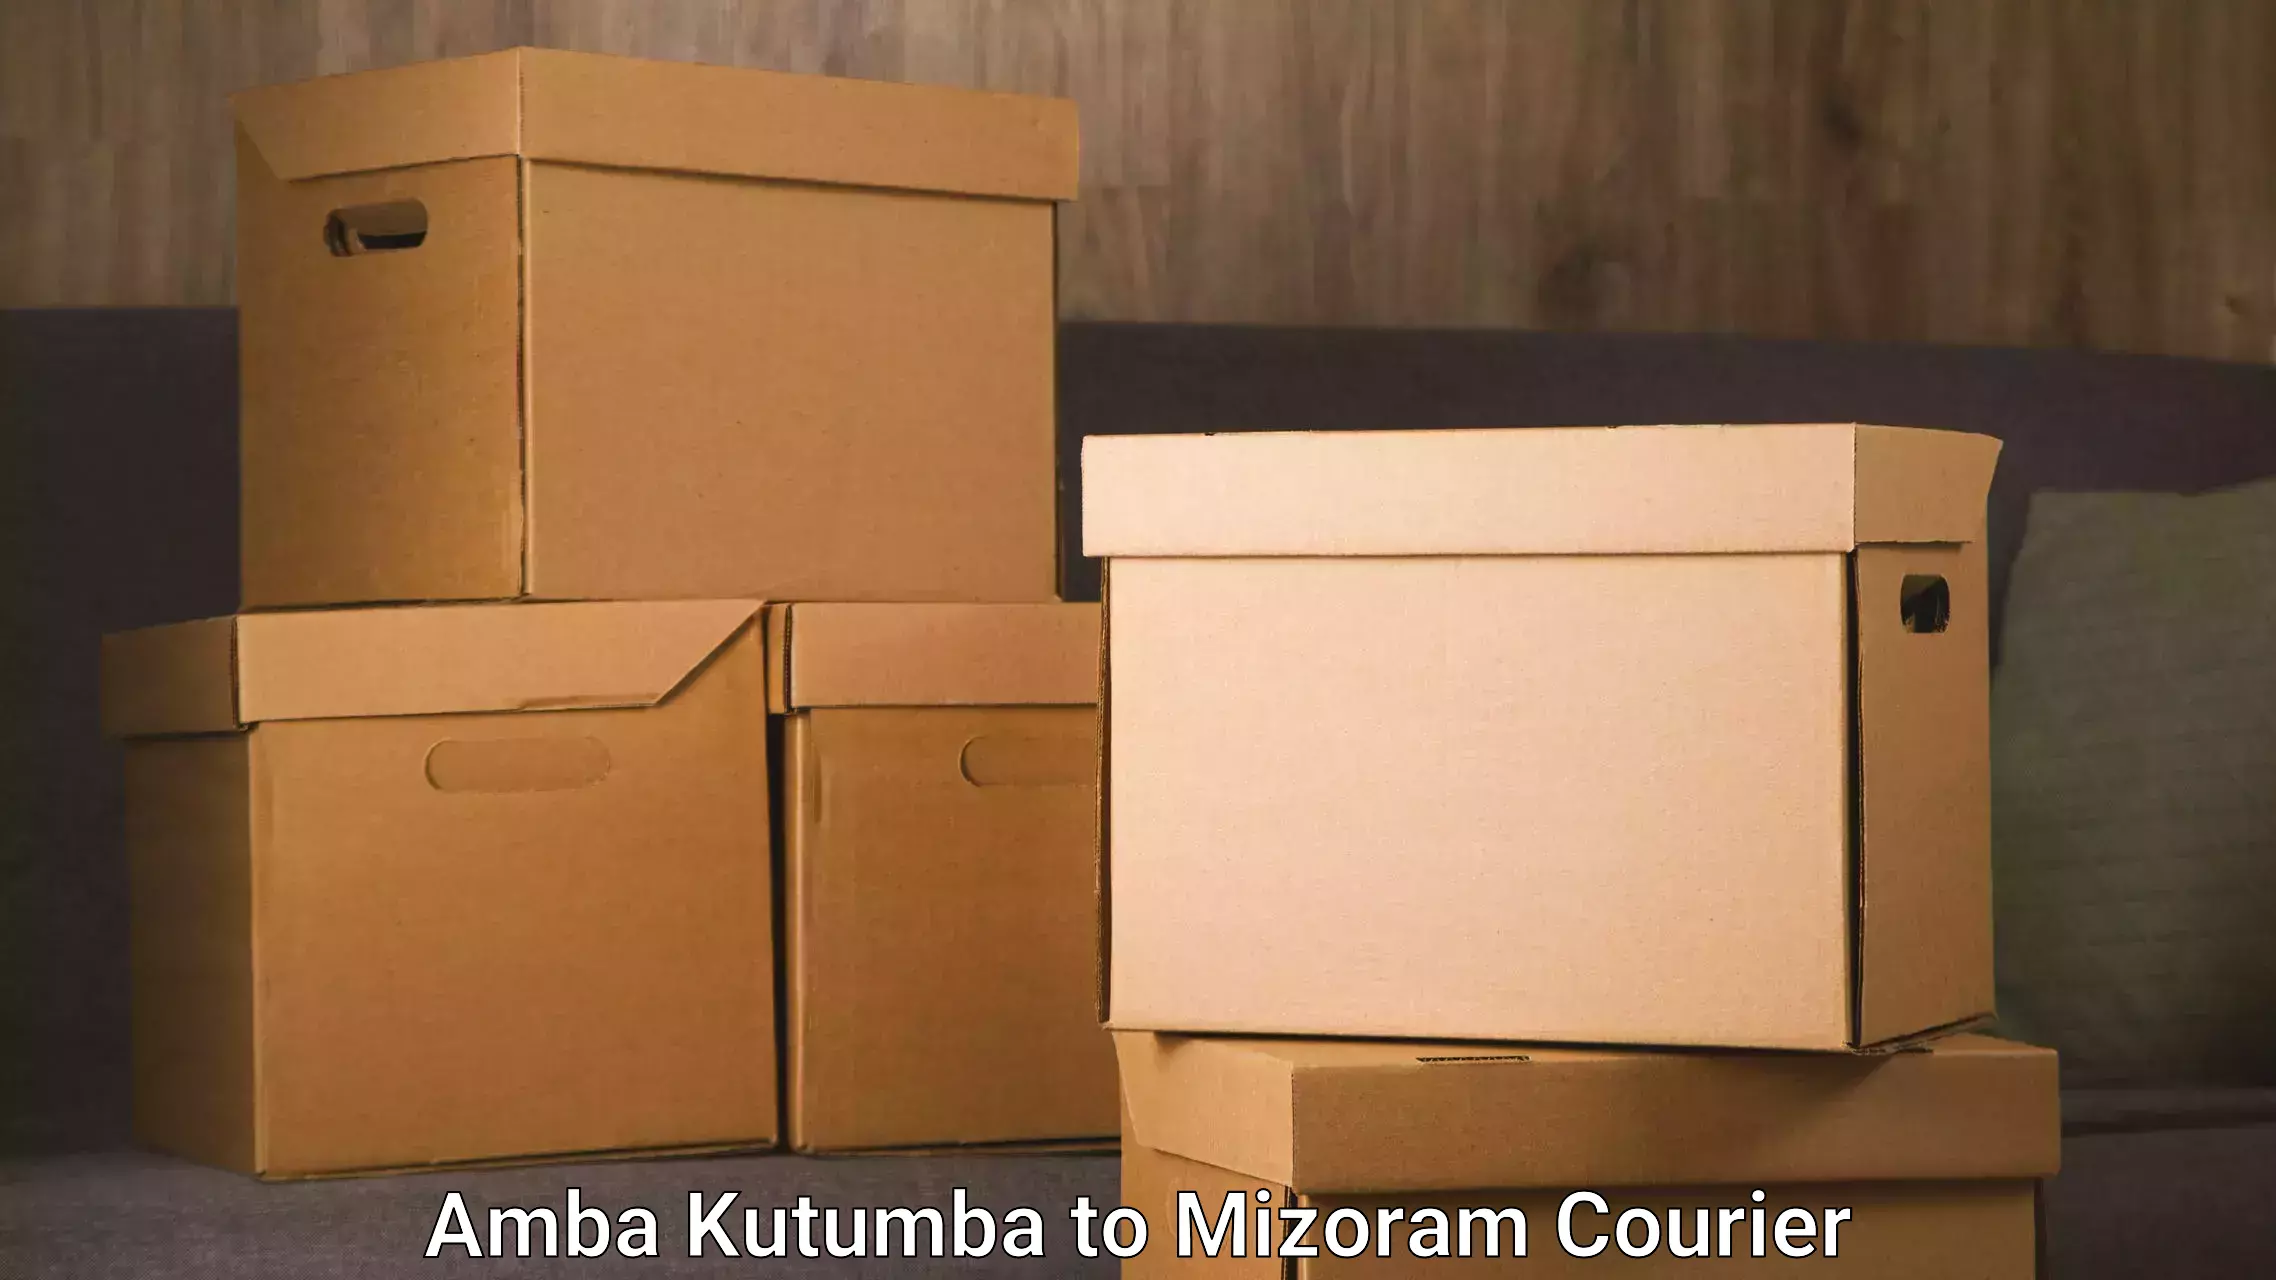 Moving and handling services Amba Kutumba to Mizoram